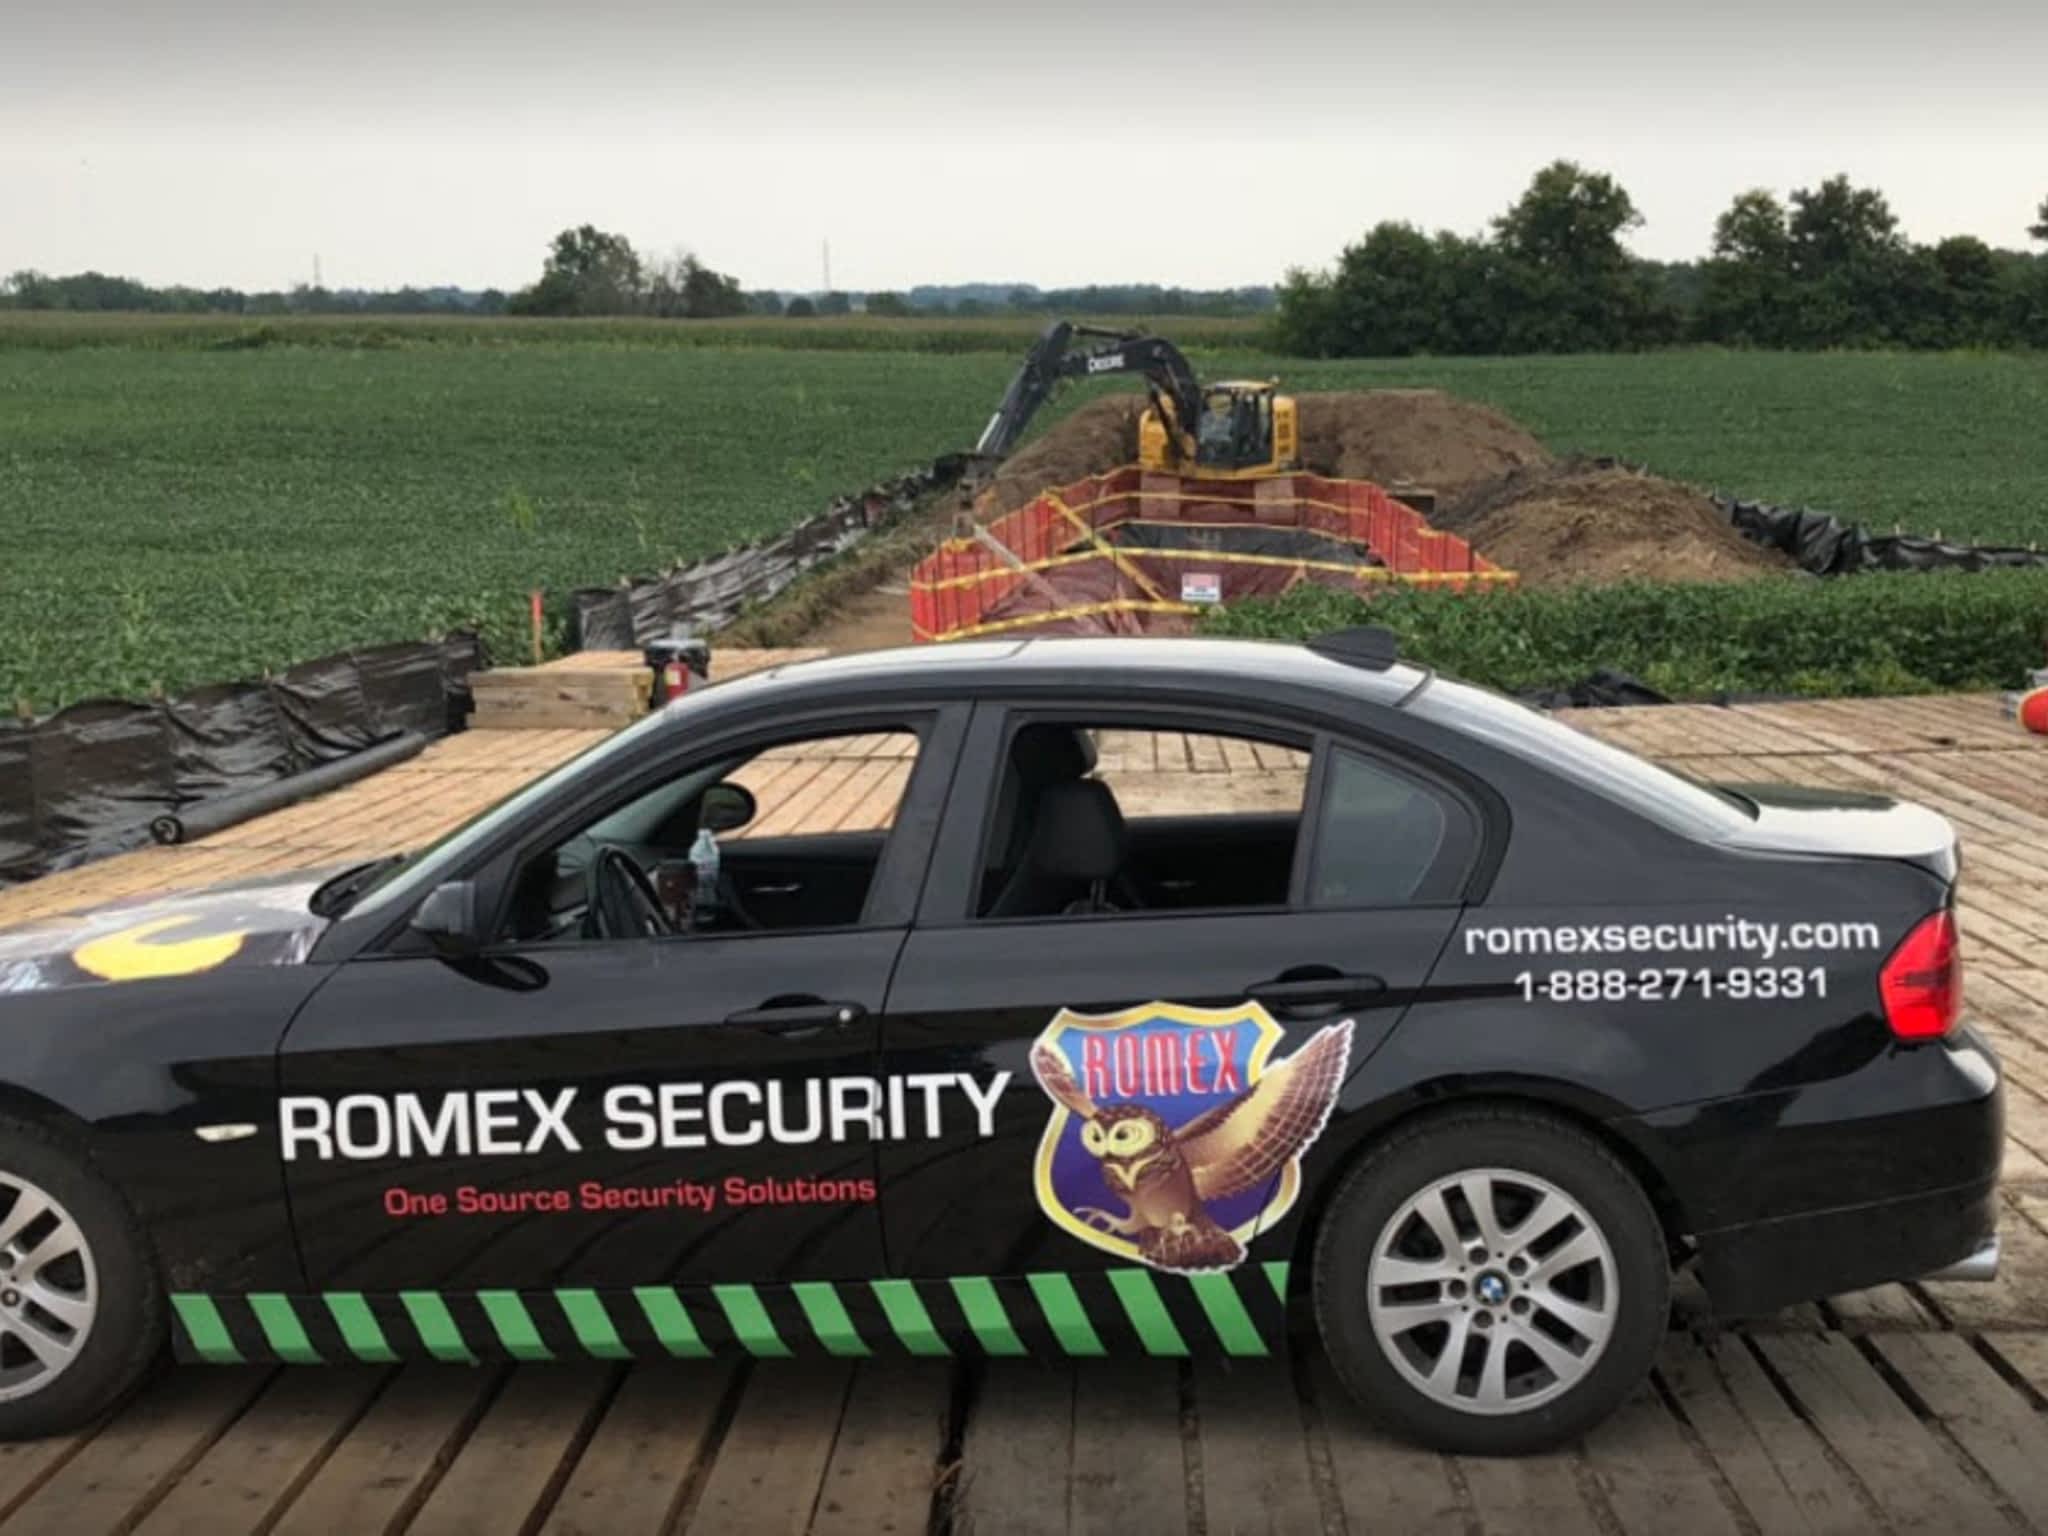 photo Romex Security Inc